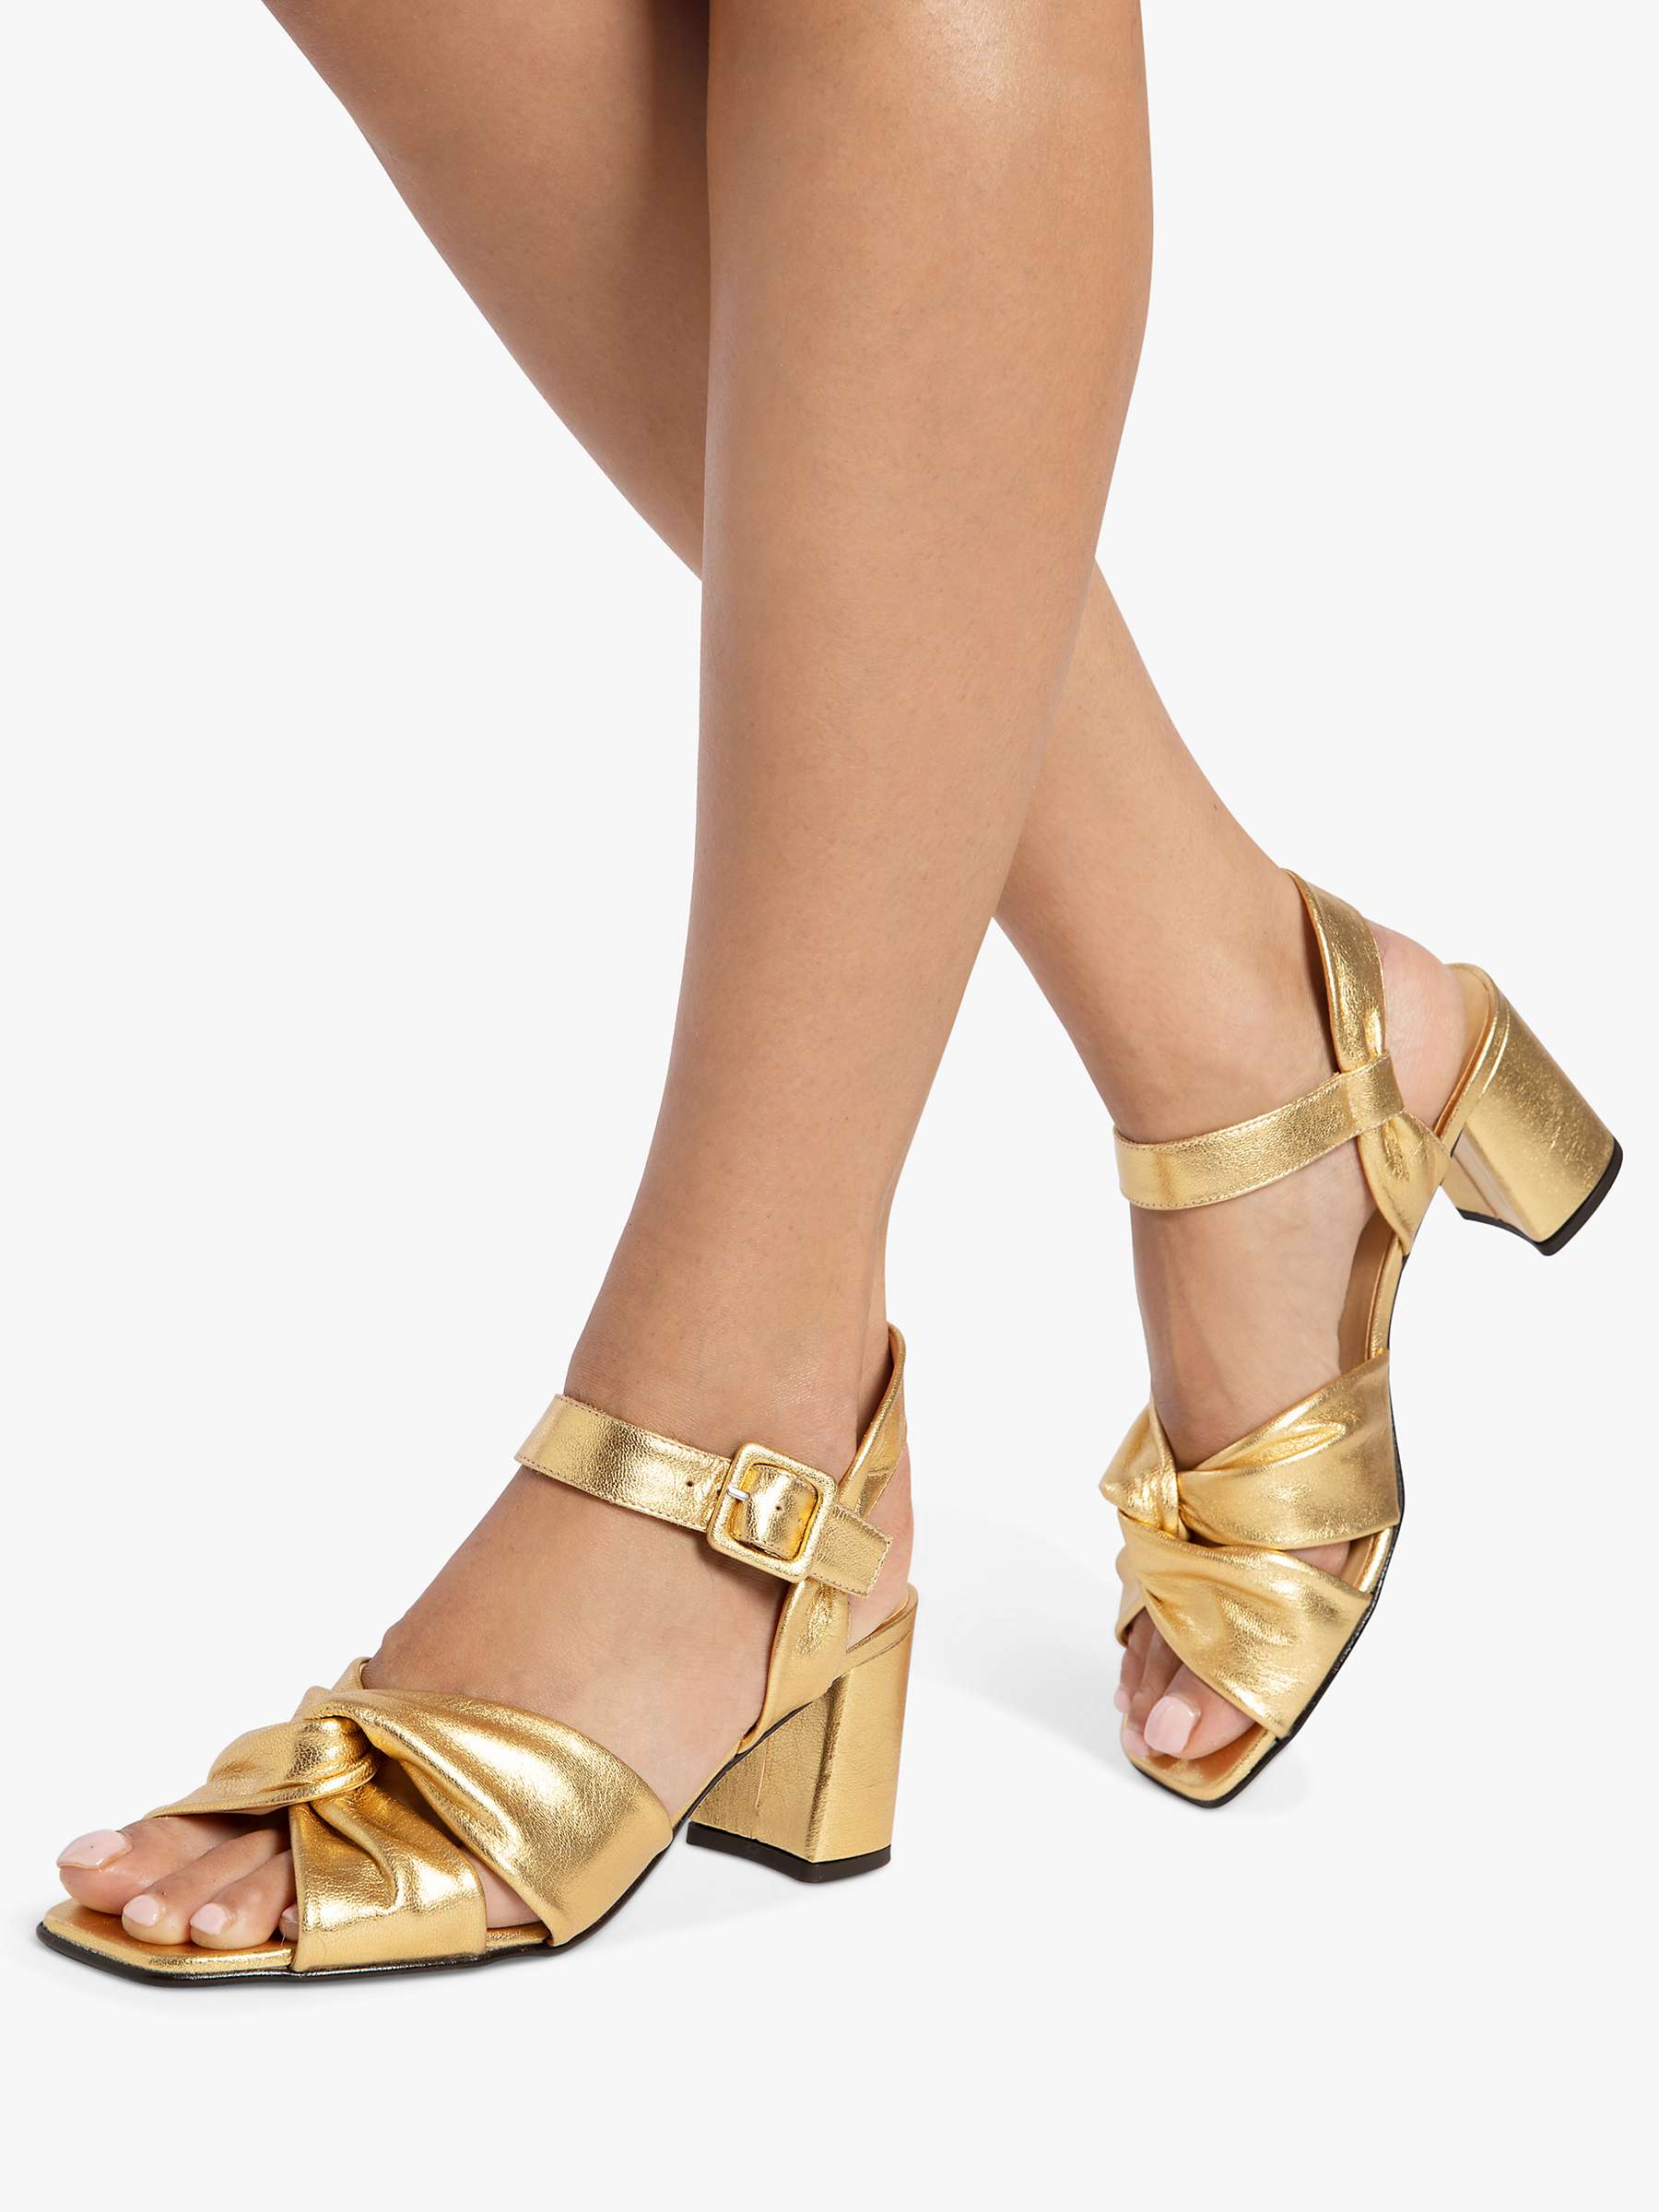 Buy Penelope Chilvers Infinity Leather Block Heel Sandals, Gold Online at johnlewis.com